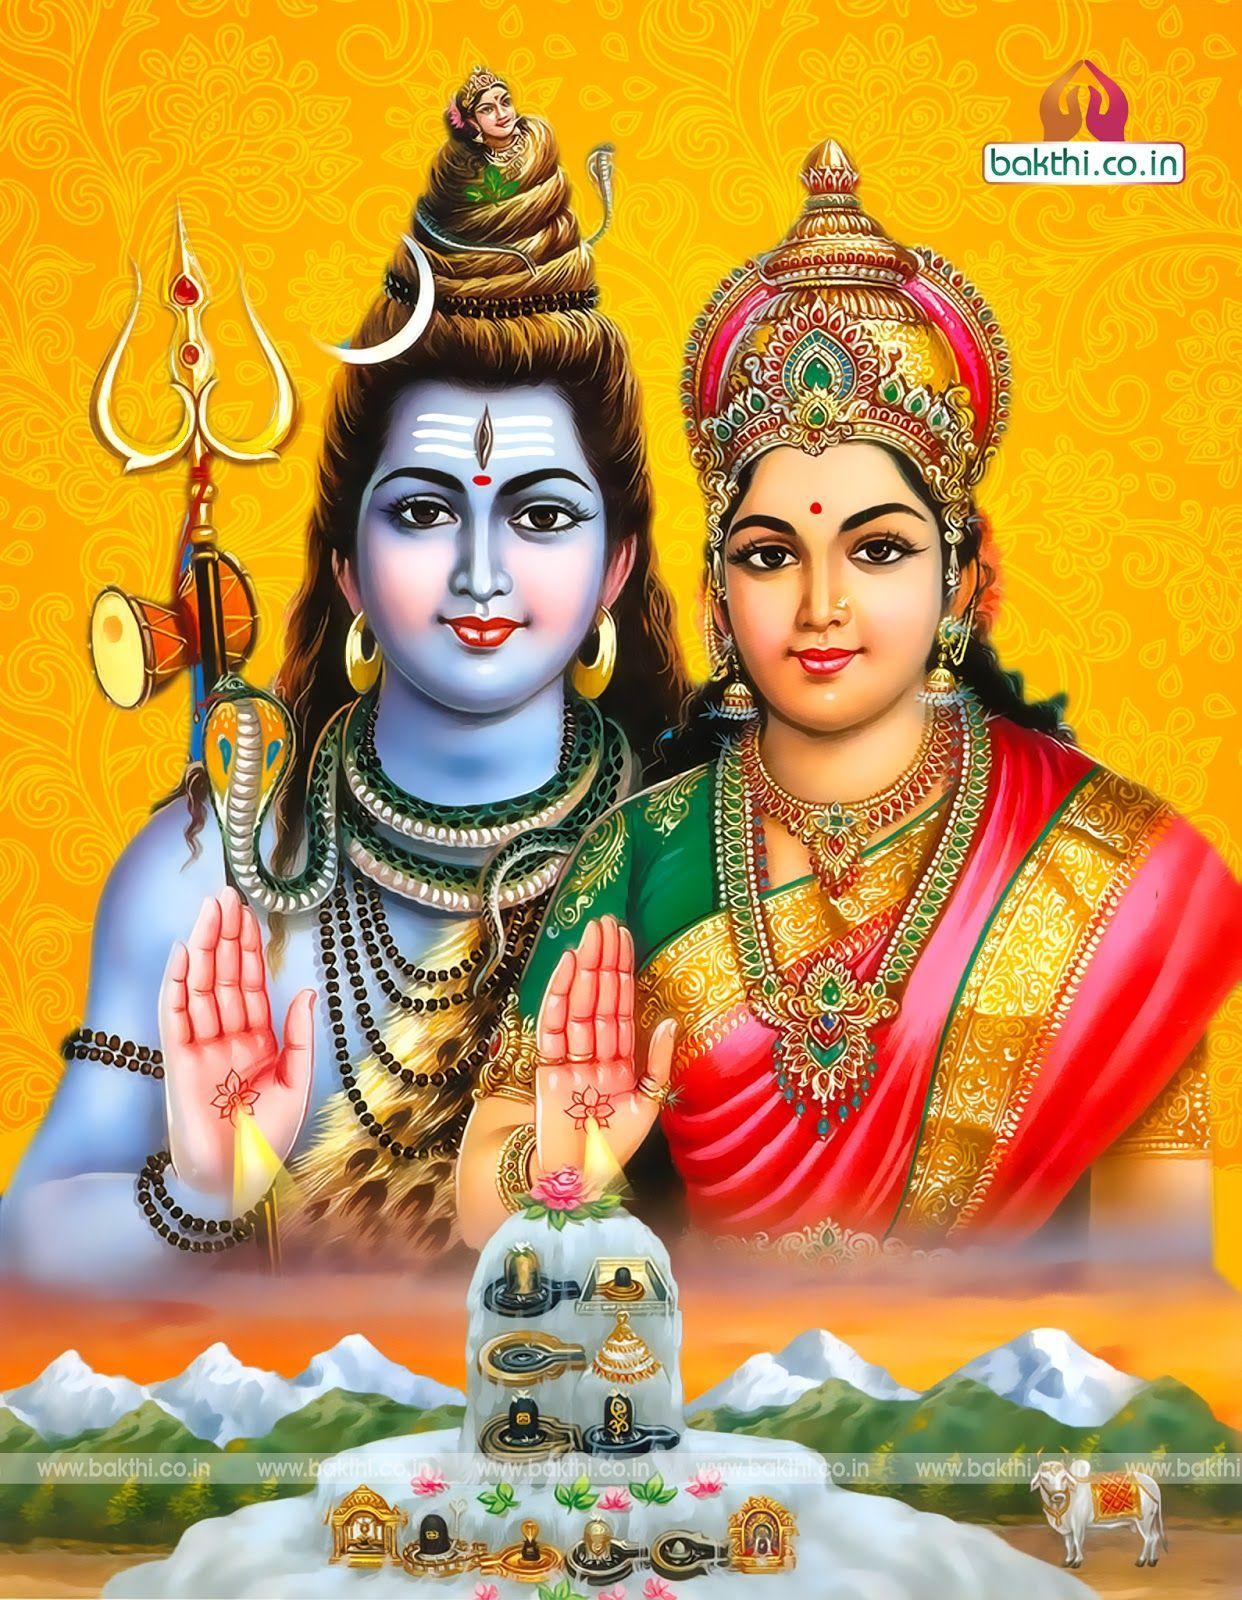 Lord shiva painting, Shiva lord wallpapers, Shiva parvati image